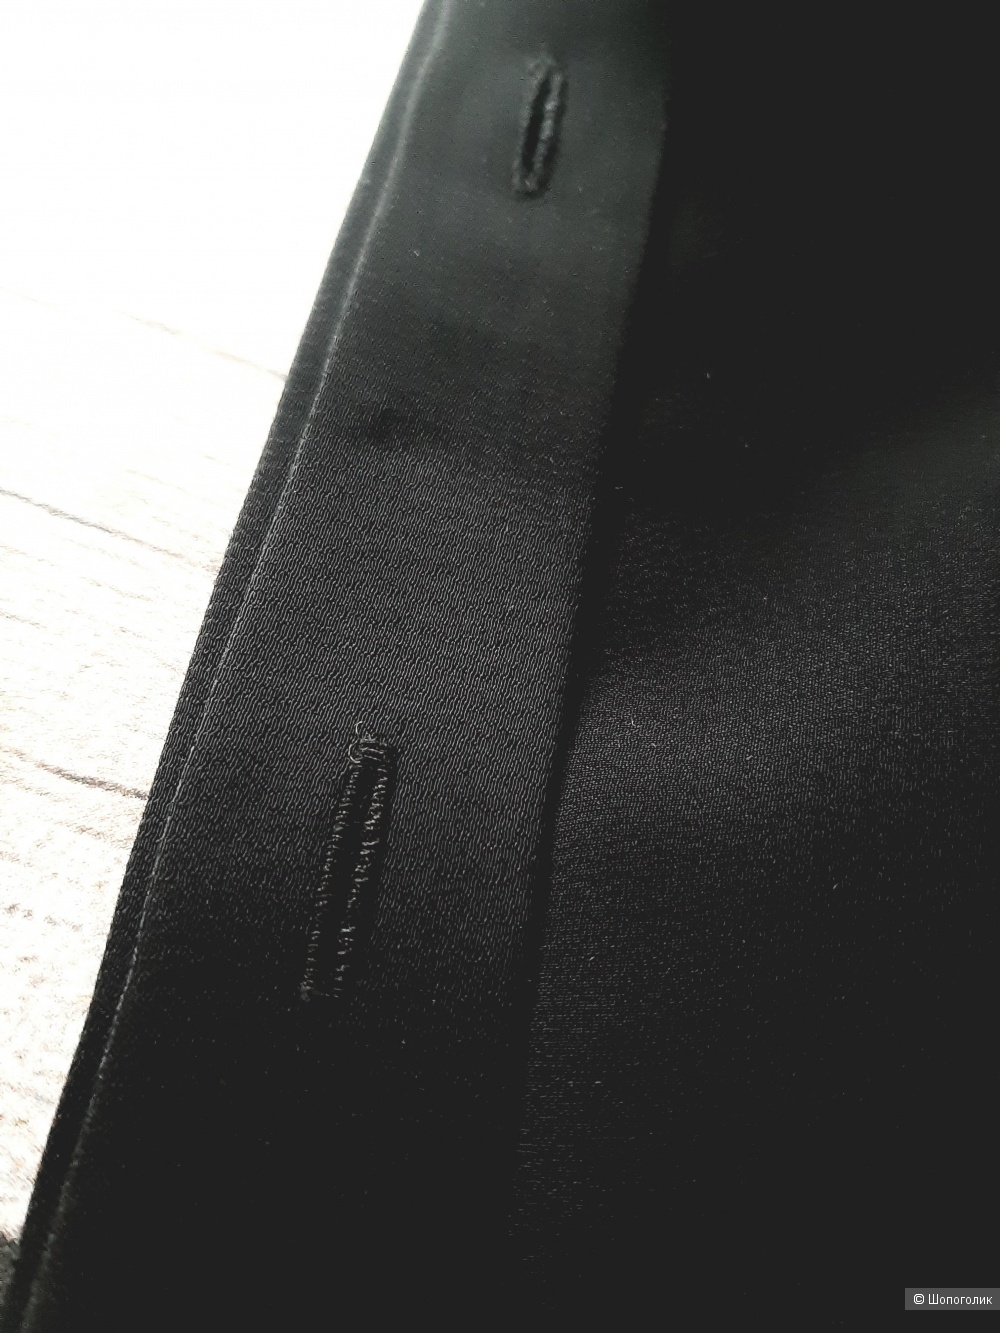 Комбинезон с брюками Armani Exchange, размер М/L